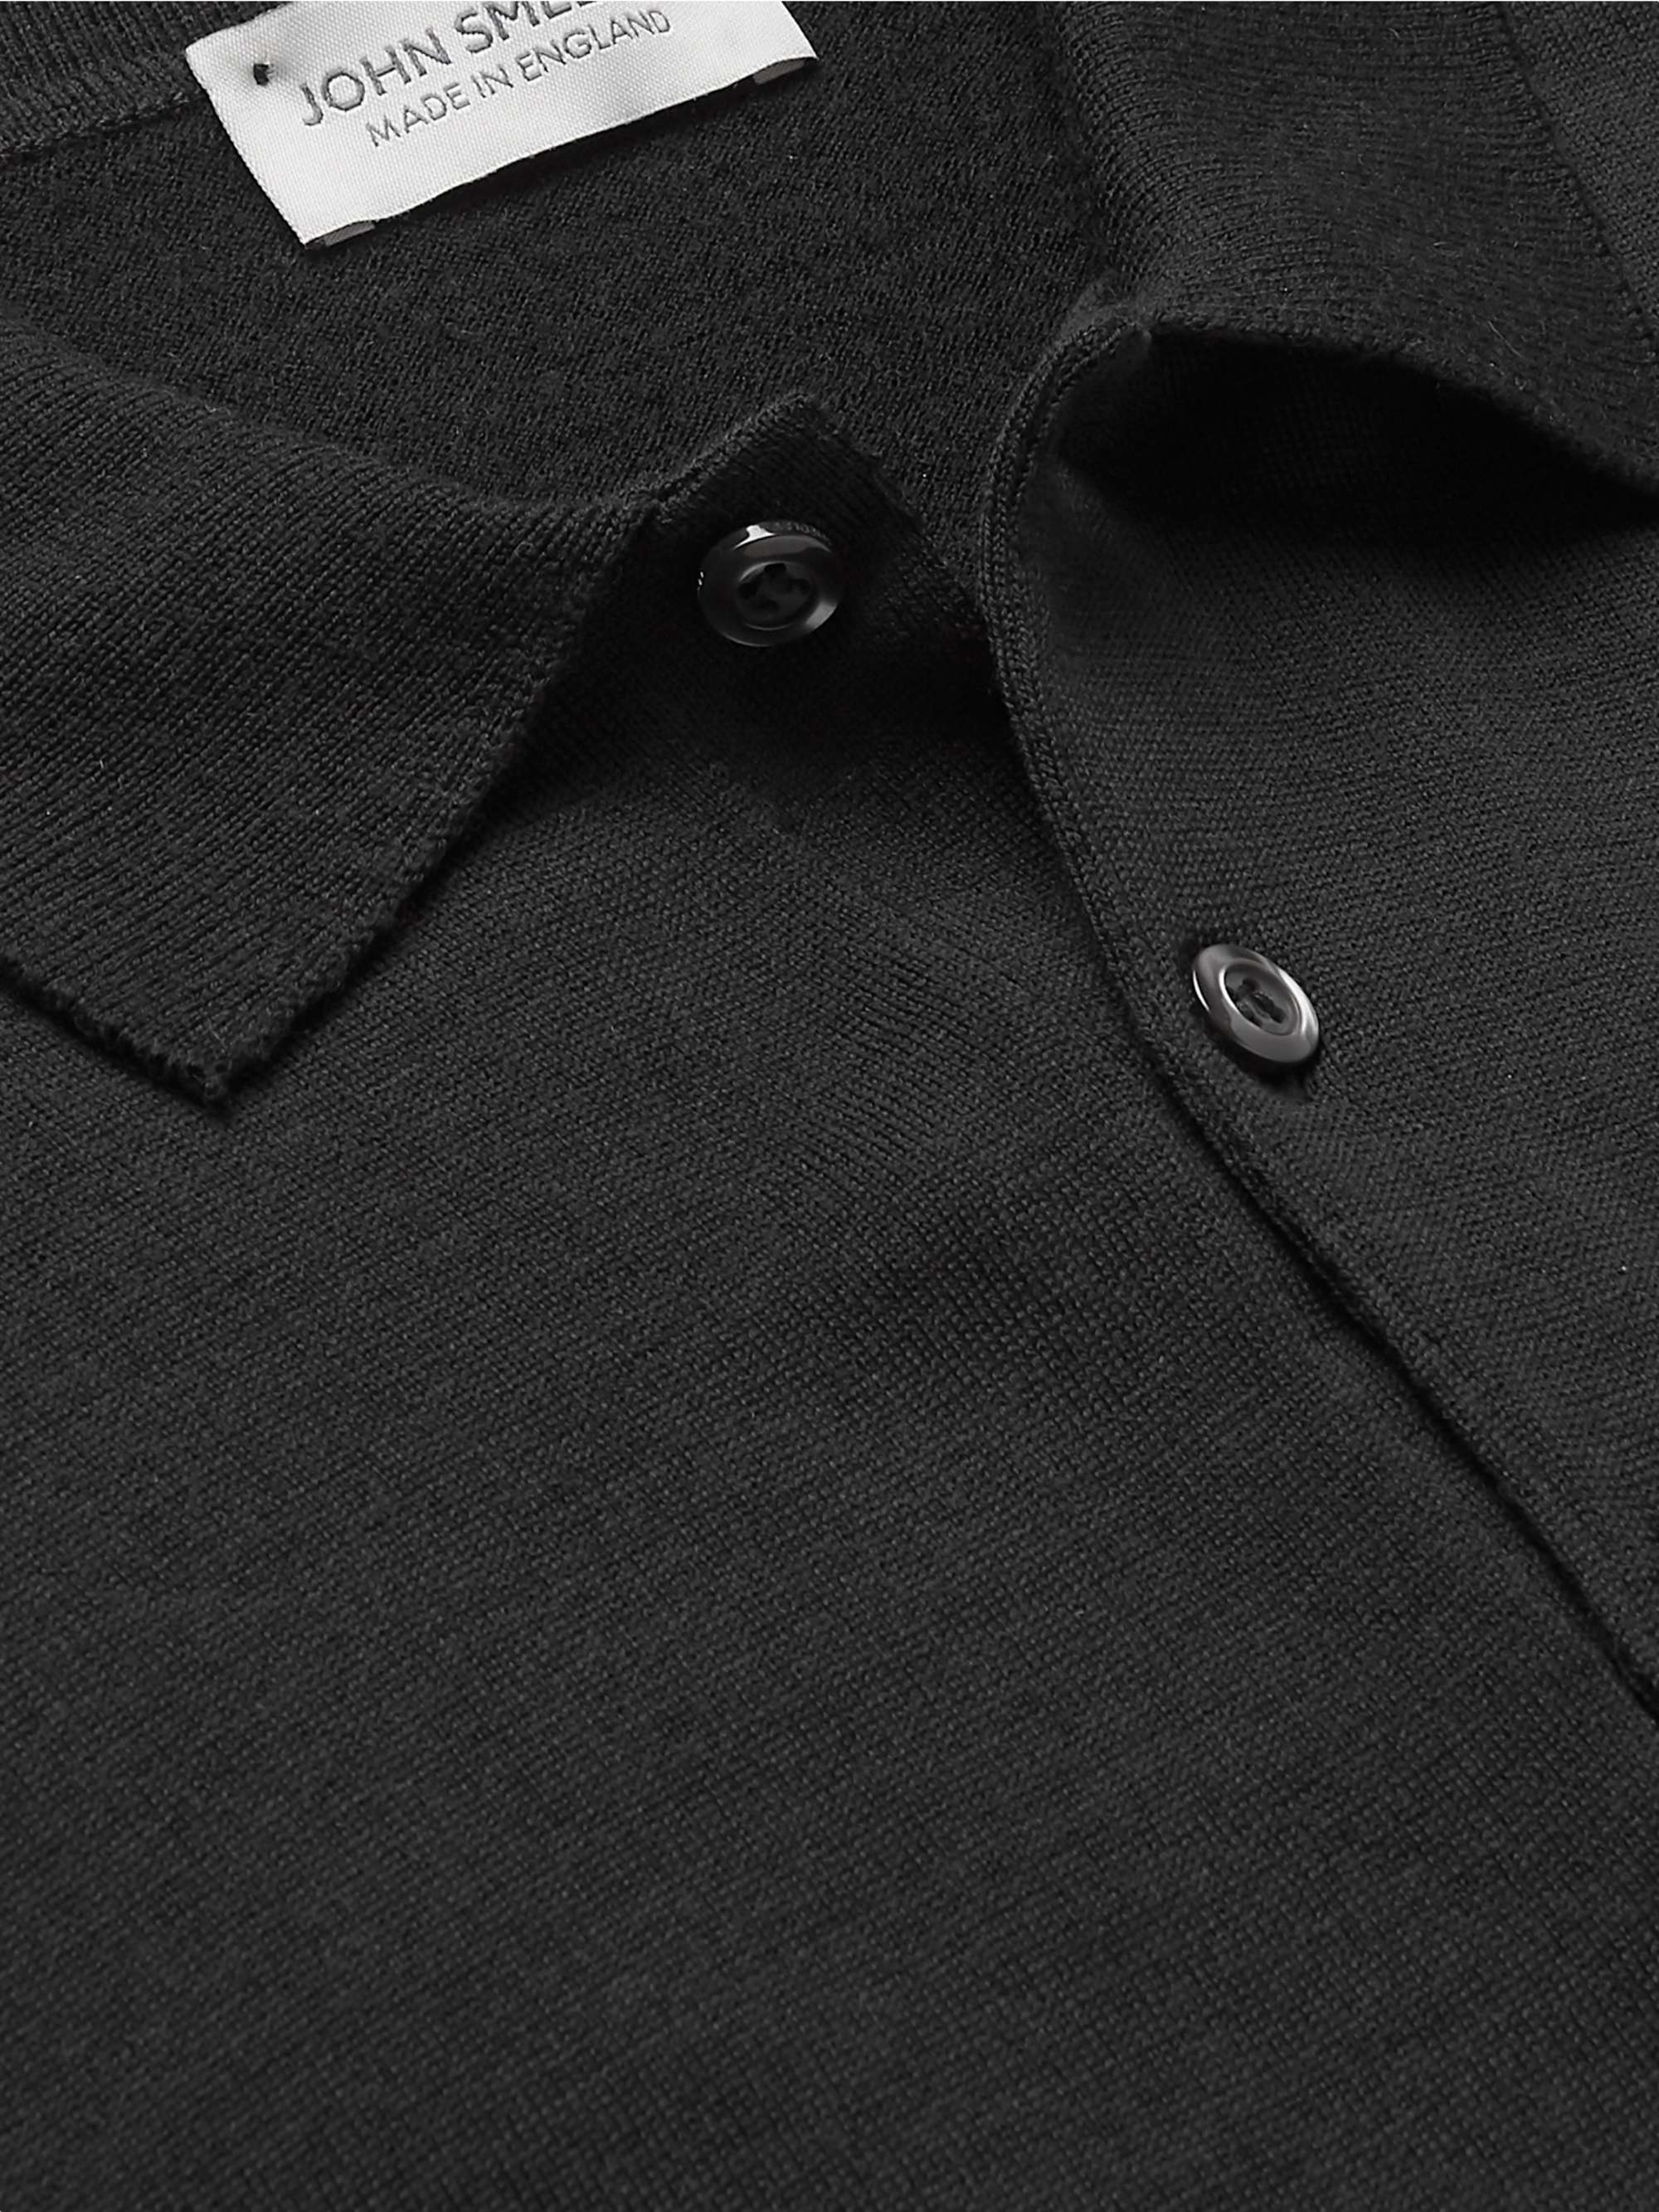 JOHN SMEDLEY Belper Slim-Fit Merino Wool Polo Shirt